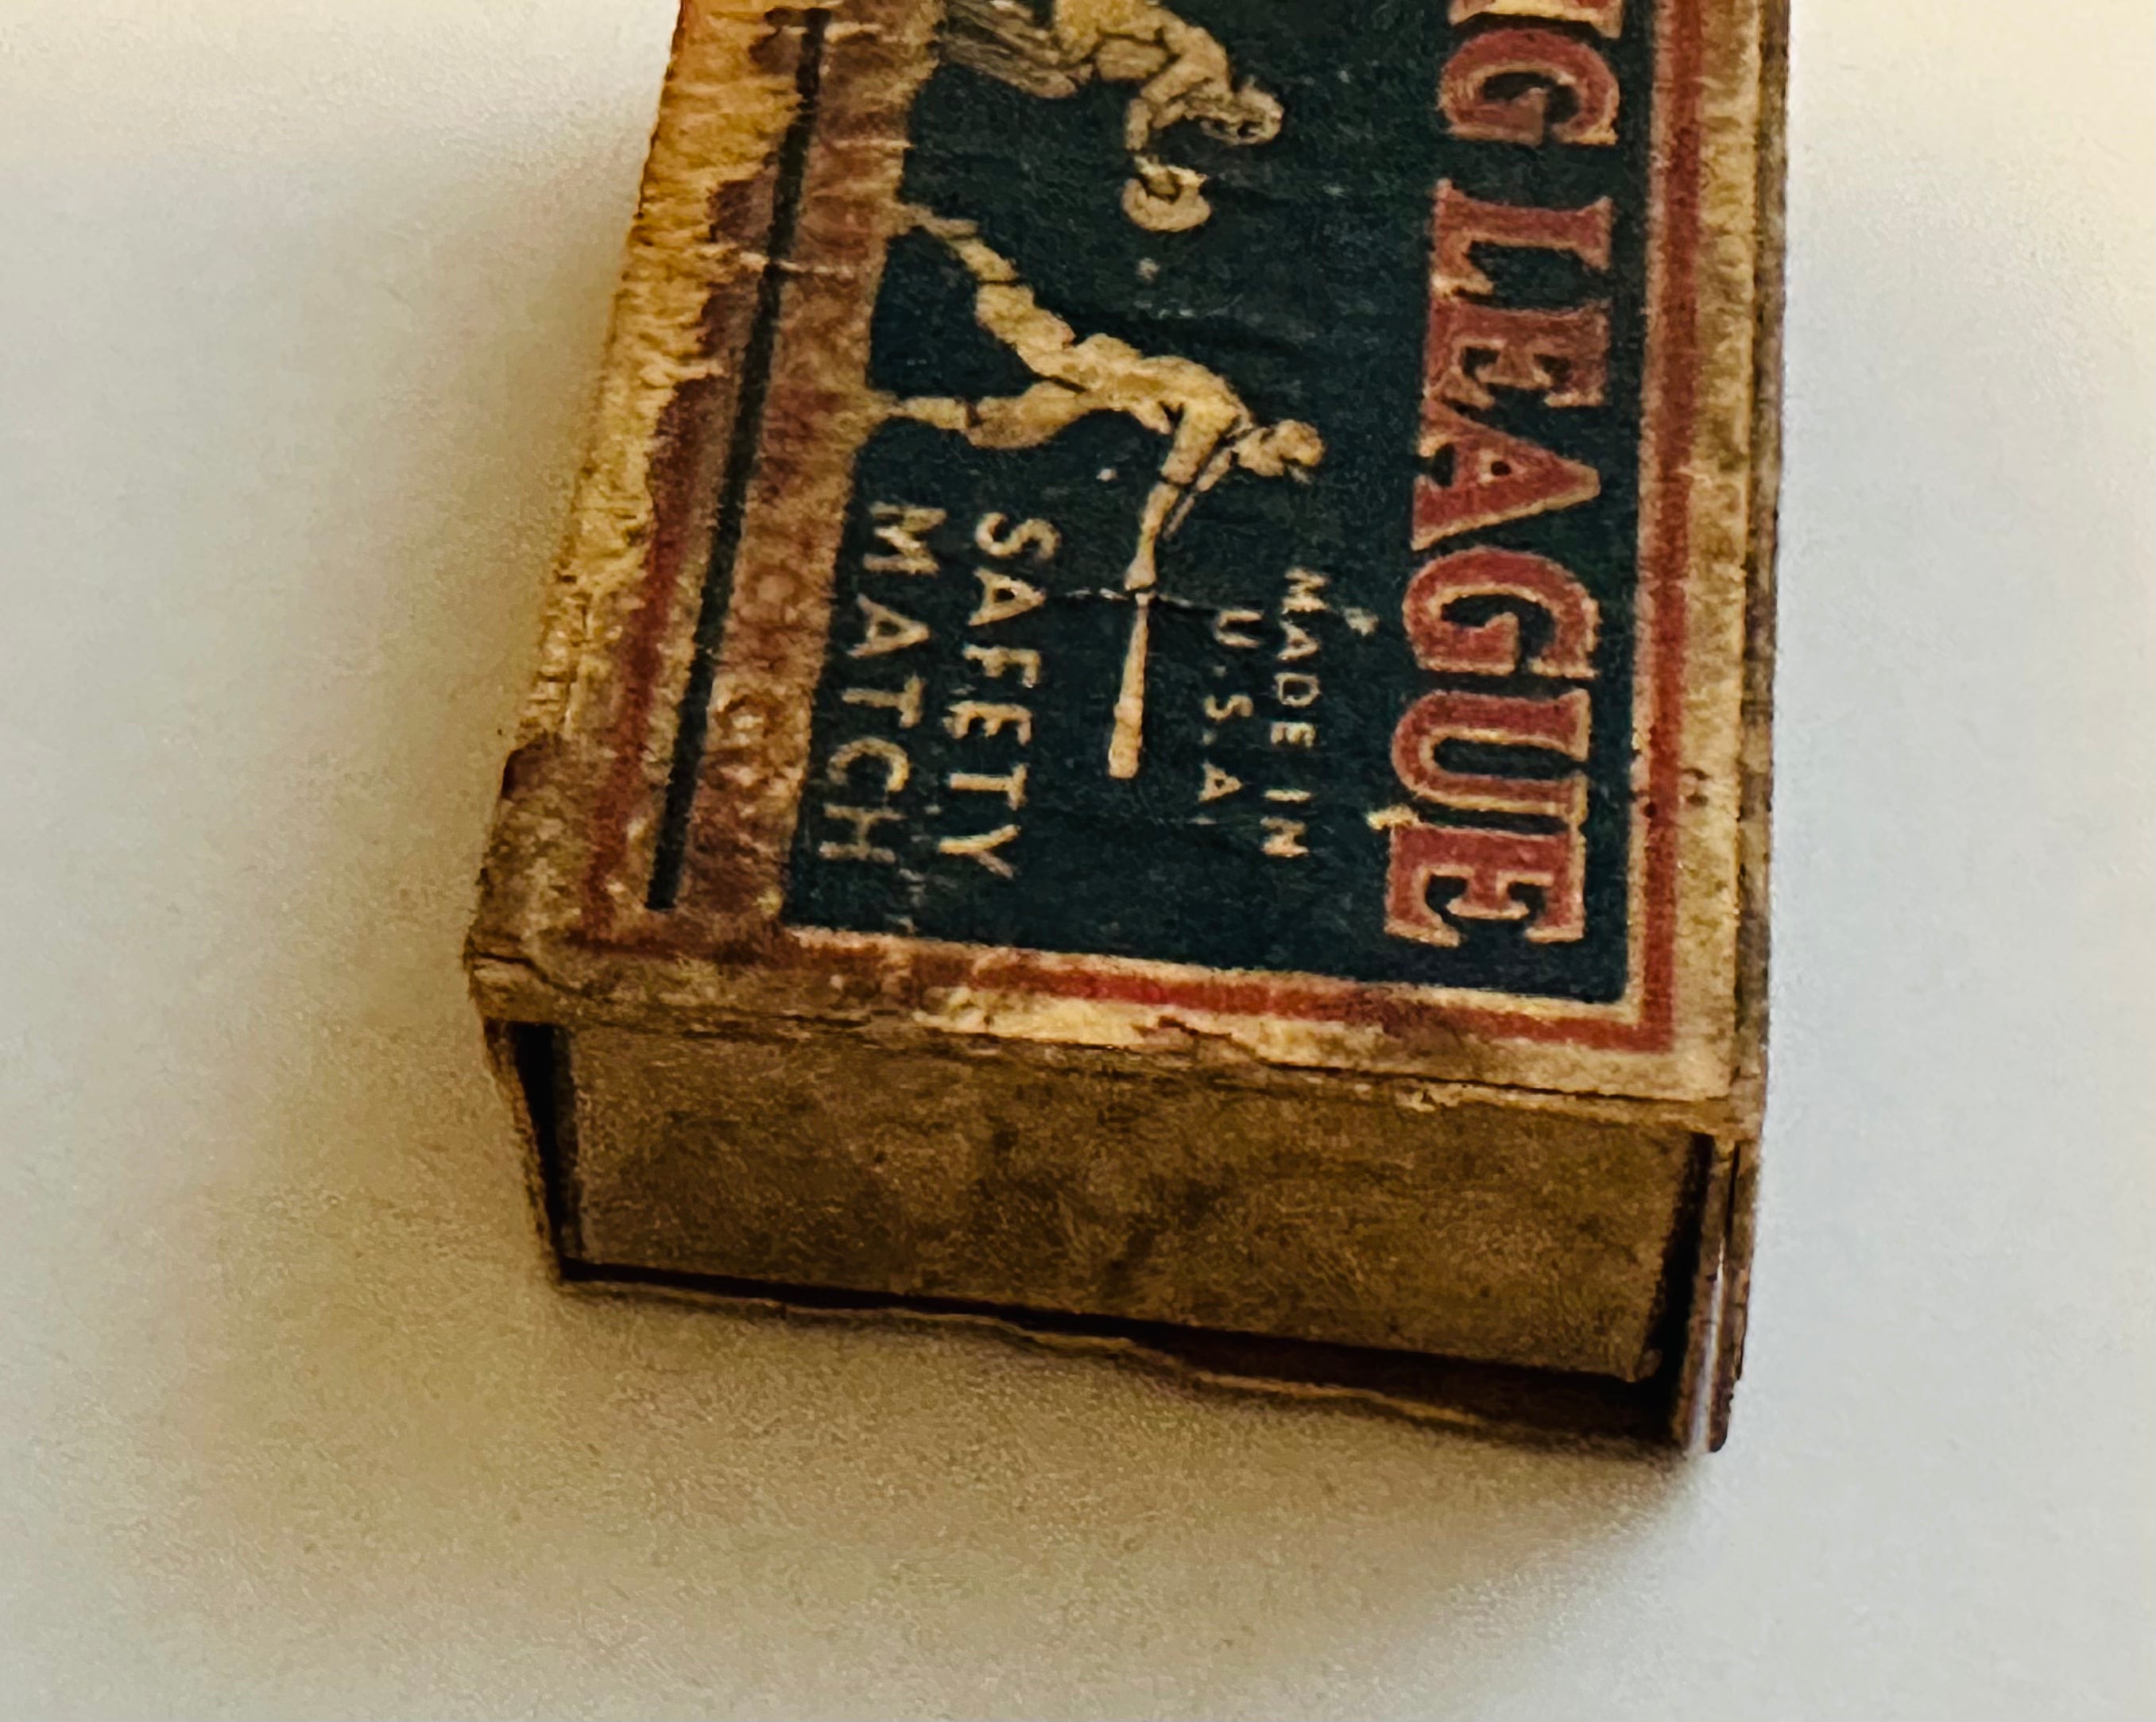 Baseball rare empty vintage match box 1910-1916?